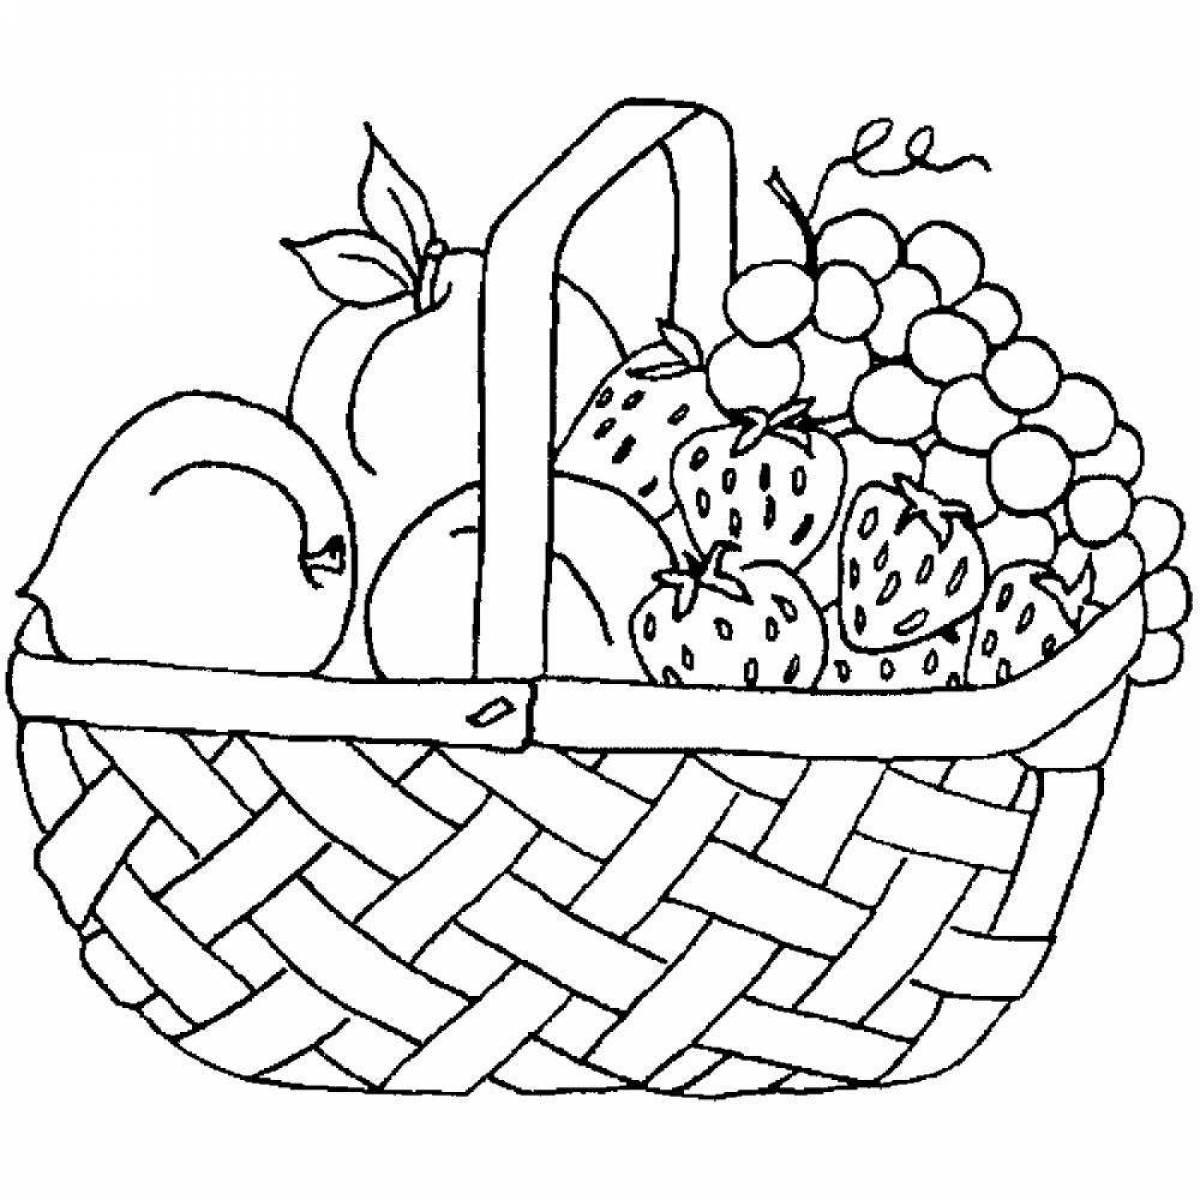 Creative fruit basket coloring book for kids